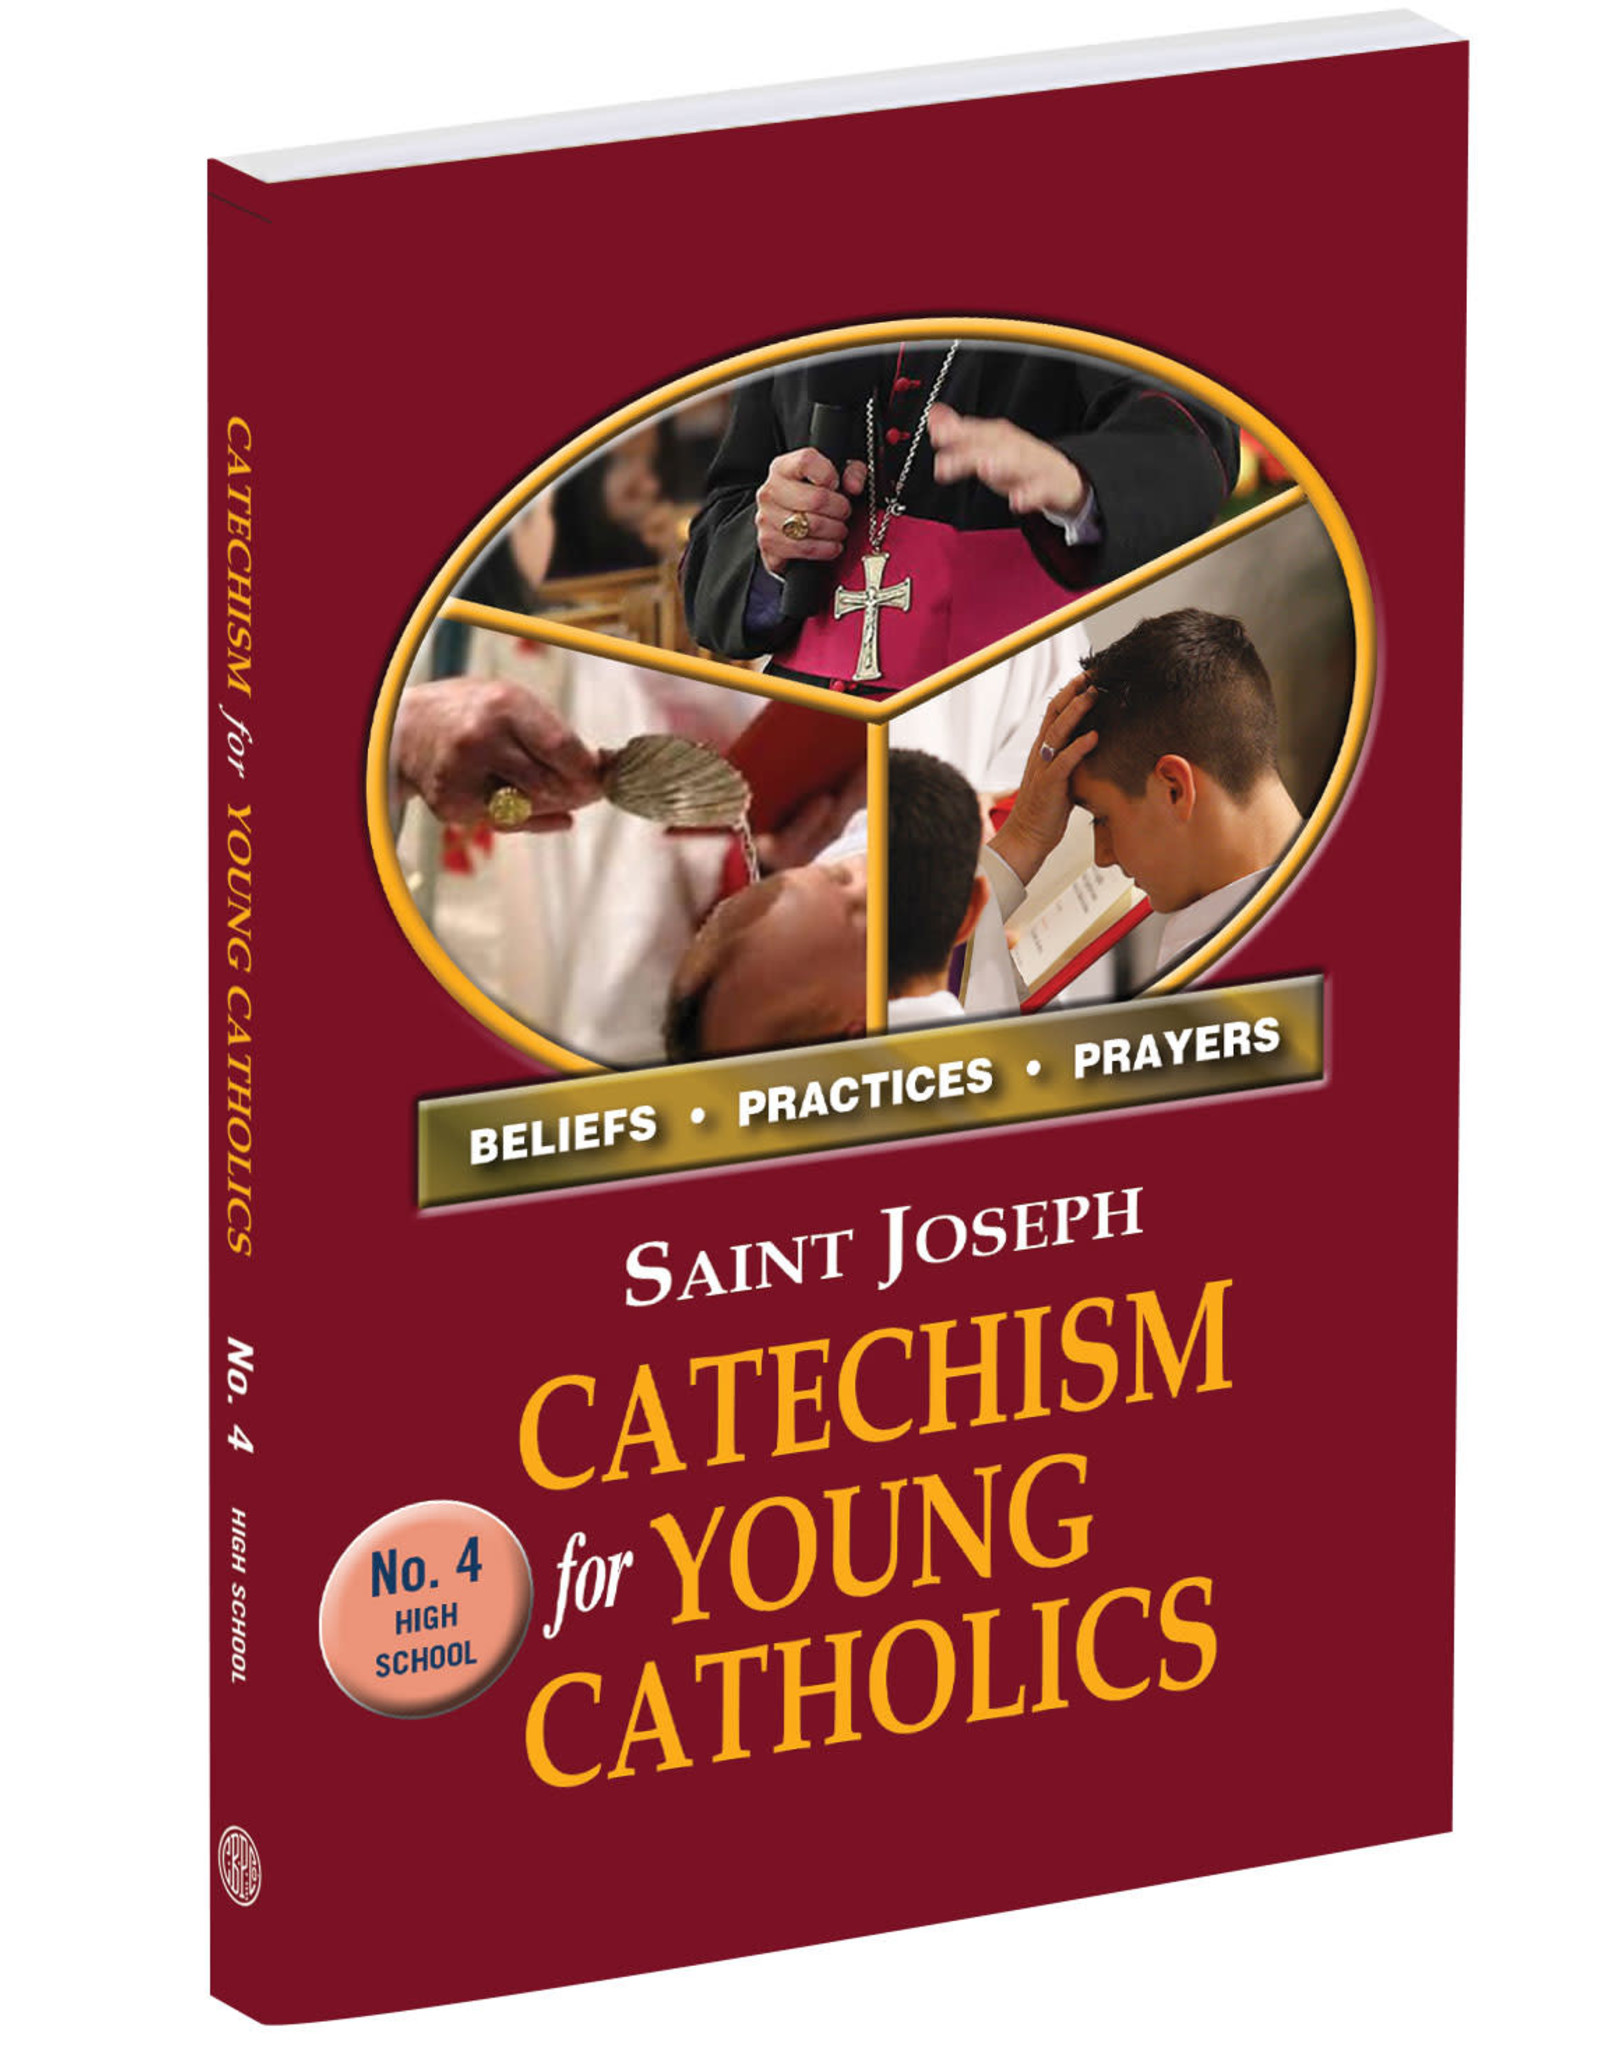 Catholic Book Publishing St. Joseph Catechism for Young Catholics No. 4 (High School)